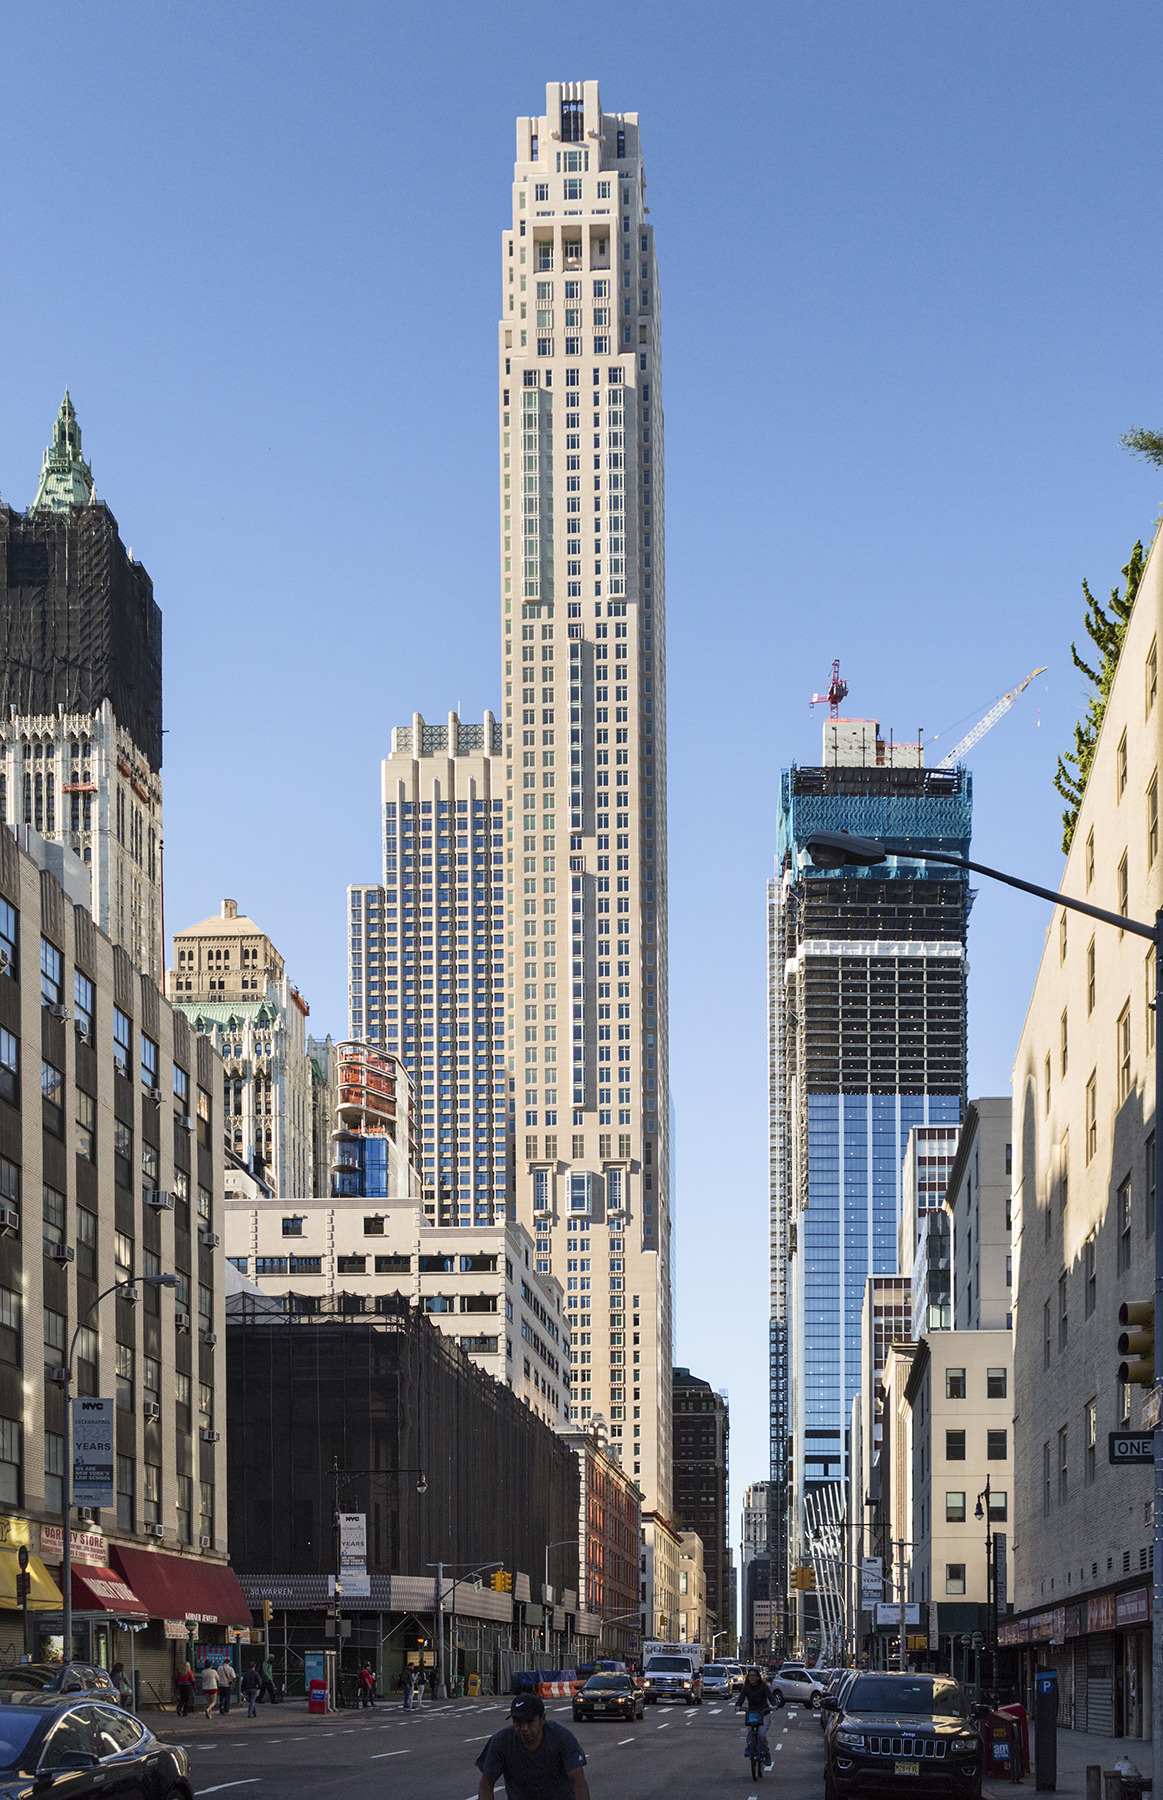 30 Park Place, Location: New York NY, Architect: Robert A M Stern Architects